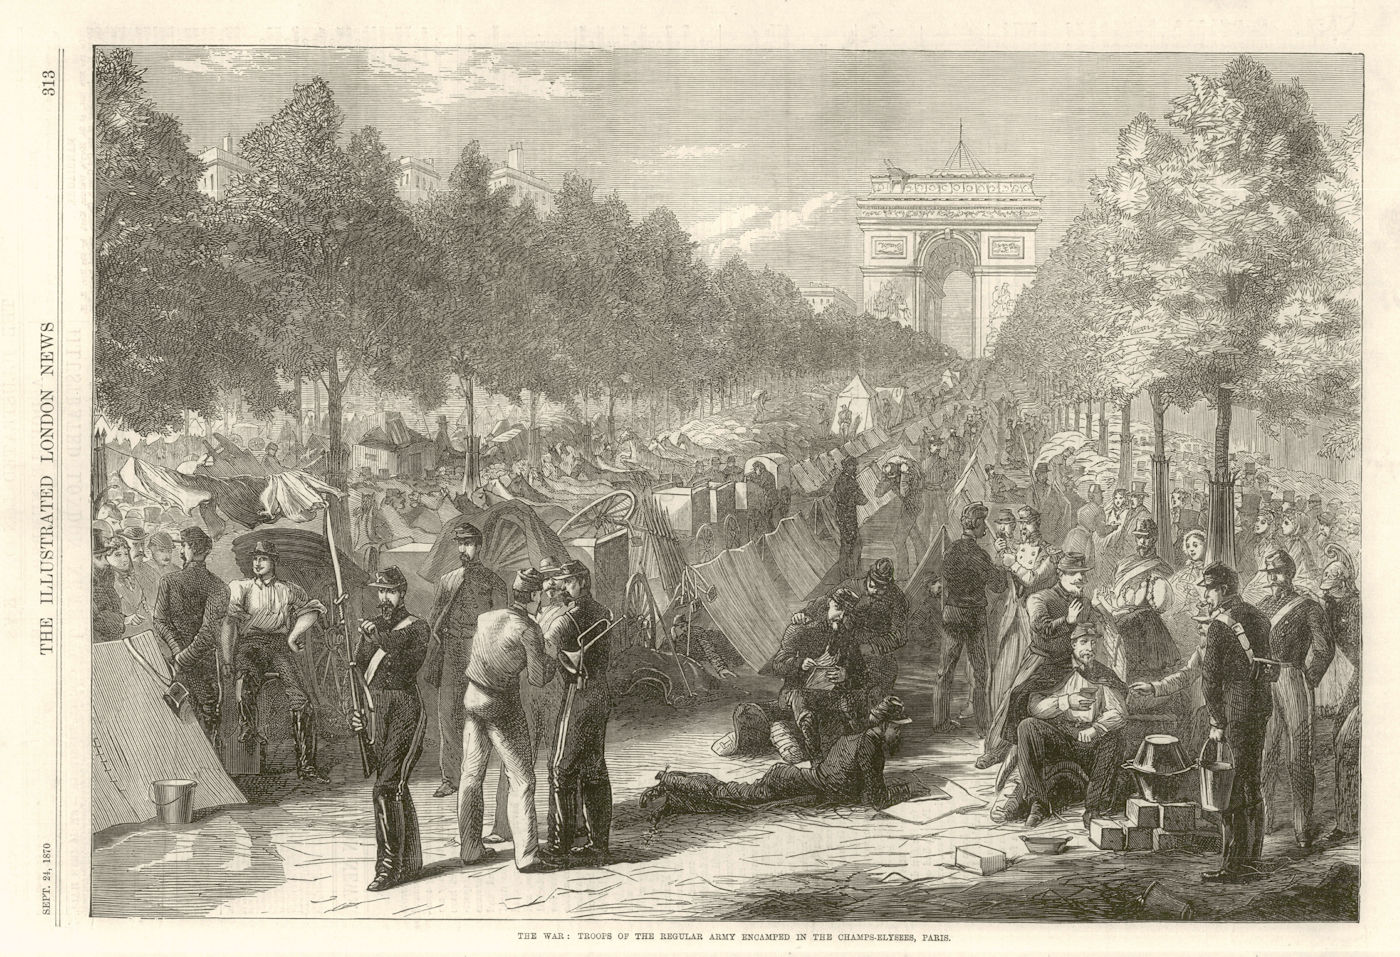 Franco-Prussian War: Troops encamped in the Champs Elysees, Paris 1870 print